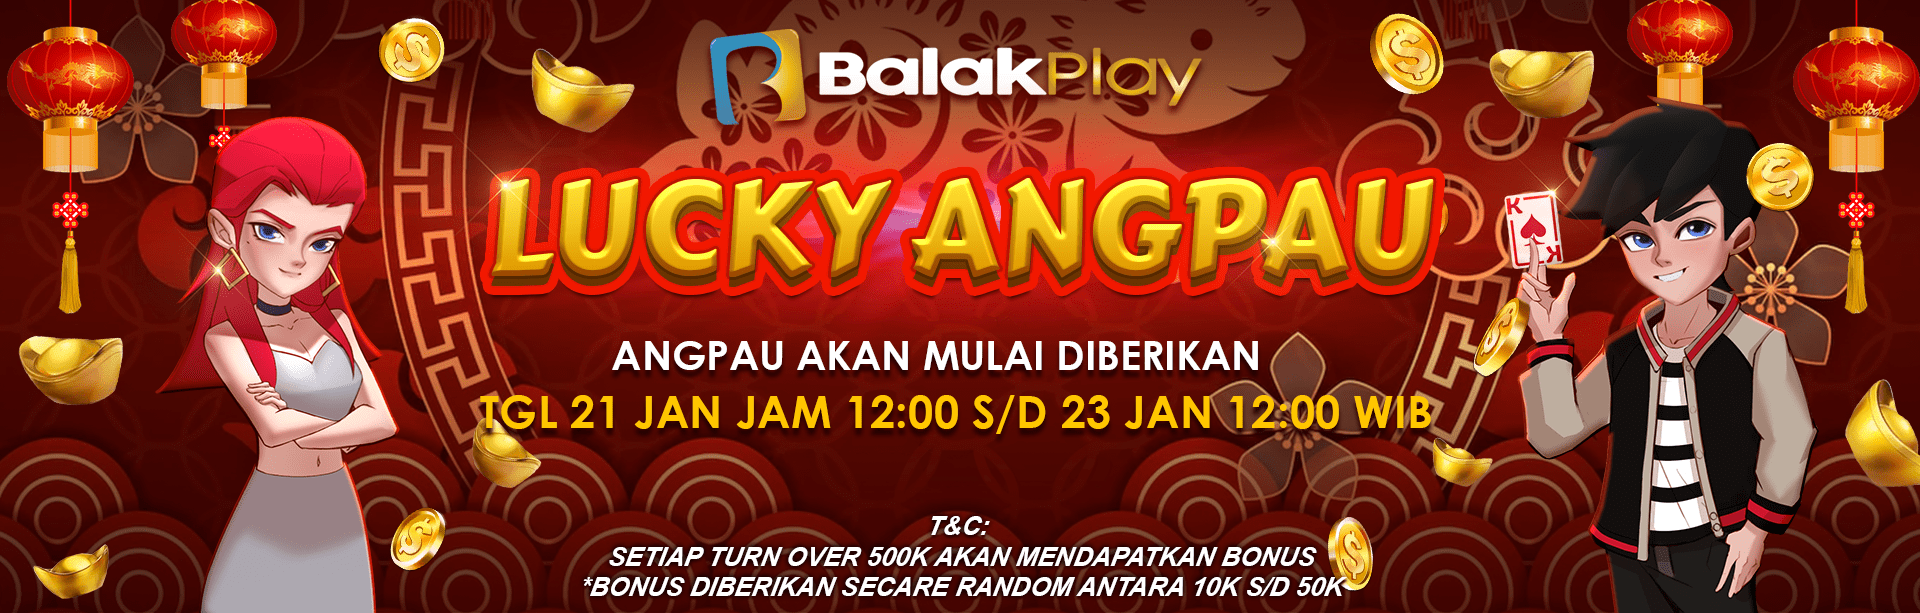 Balakplay CNY Lucky Angpao